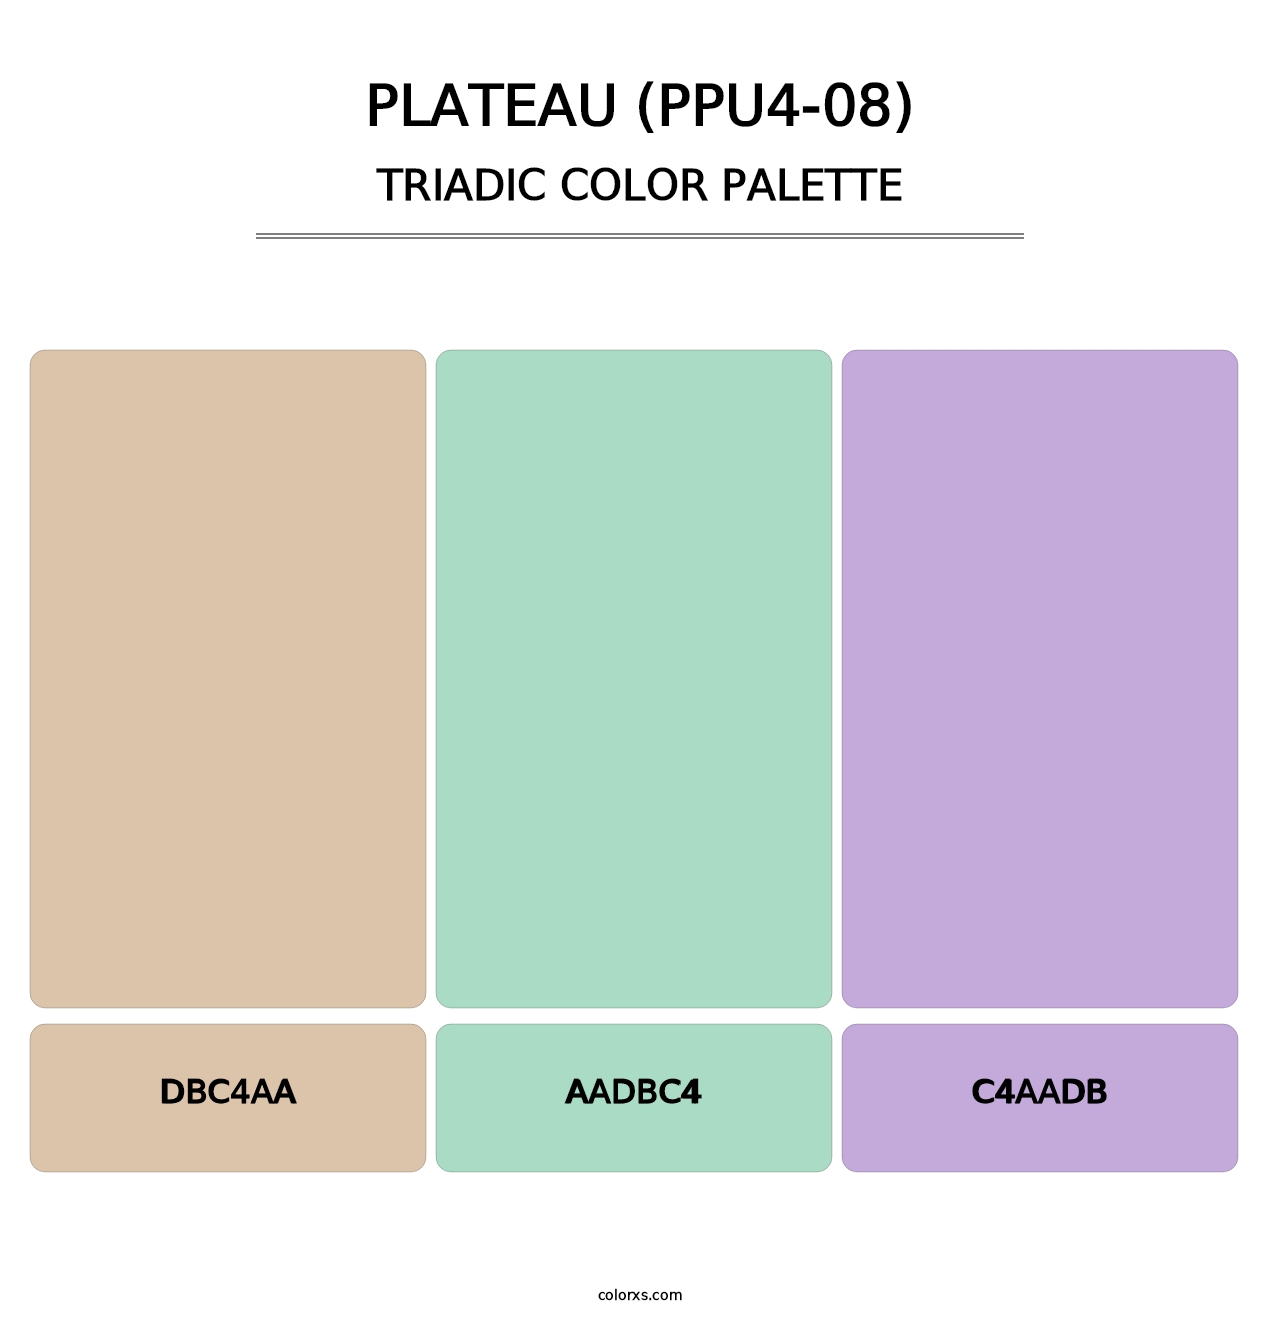 Plateau (PPU4-08) - Triadic Color Palette